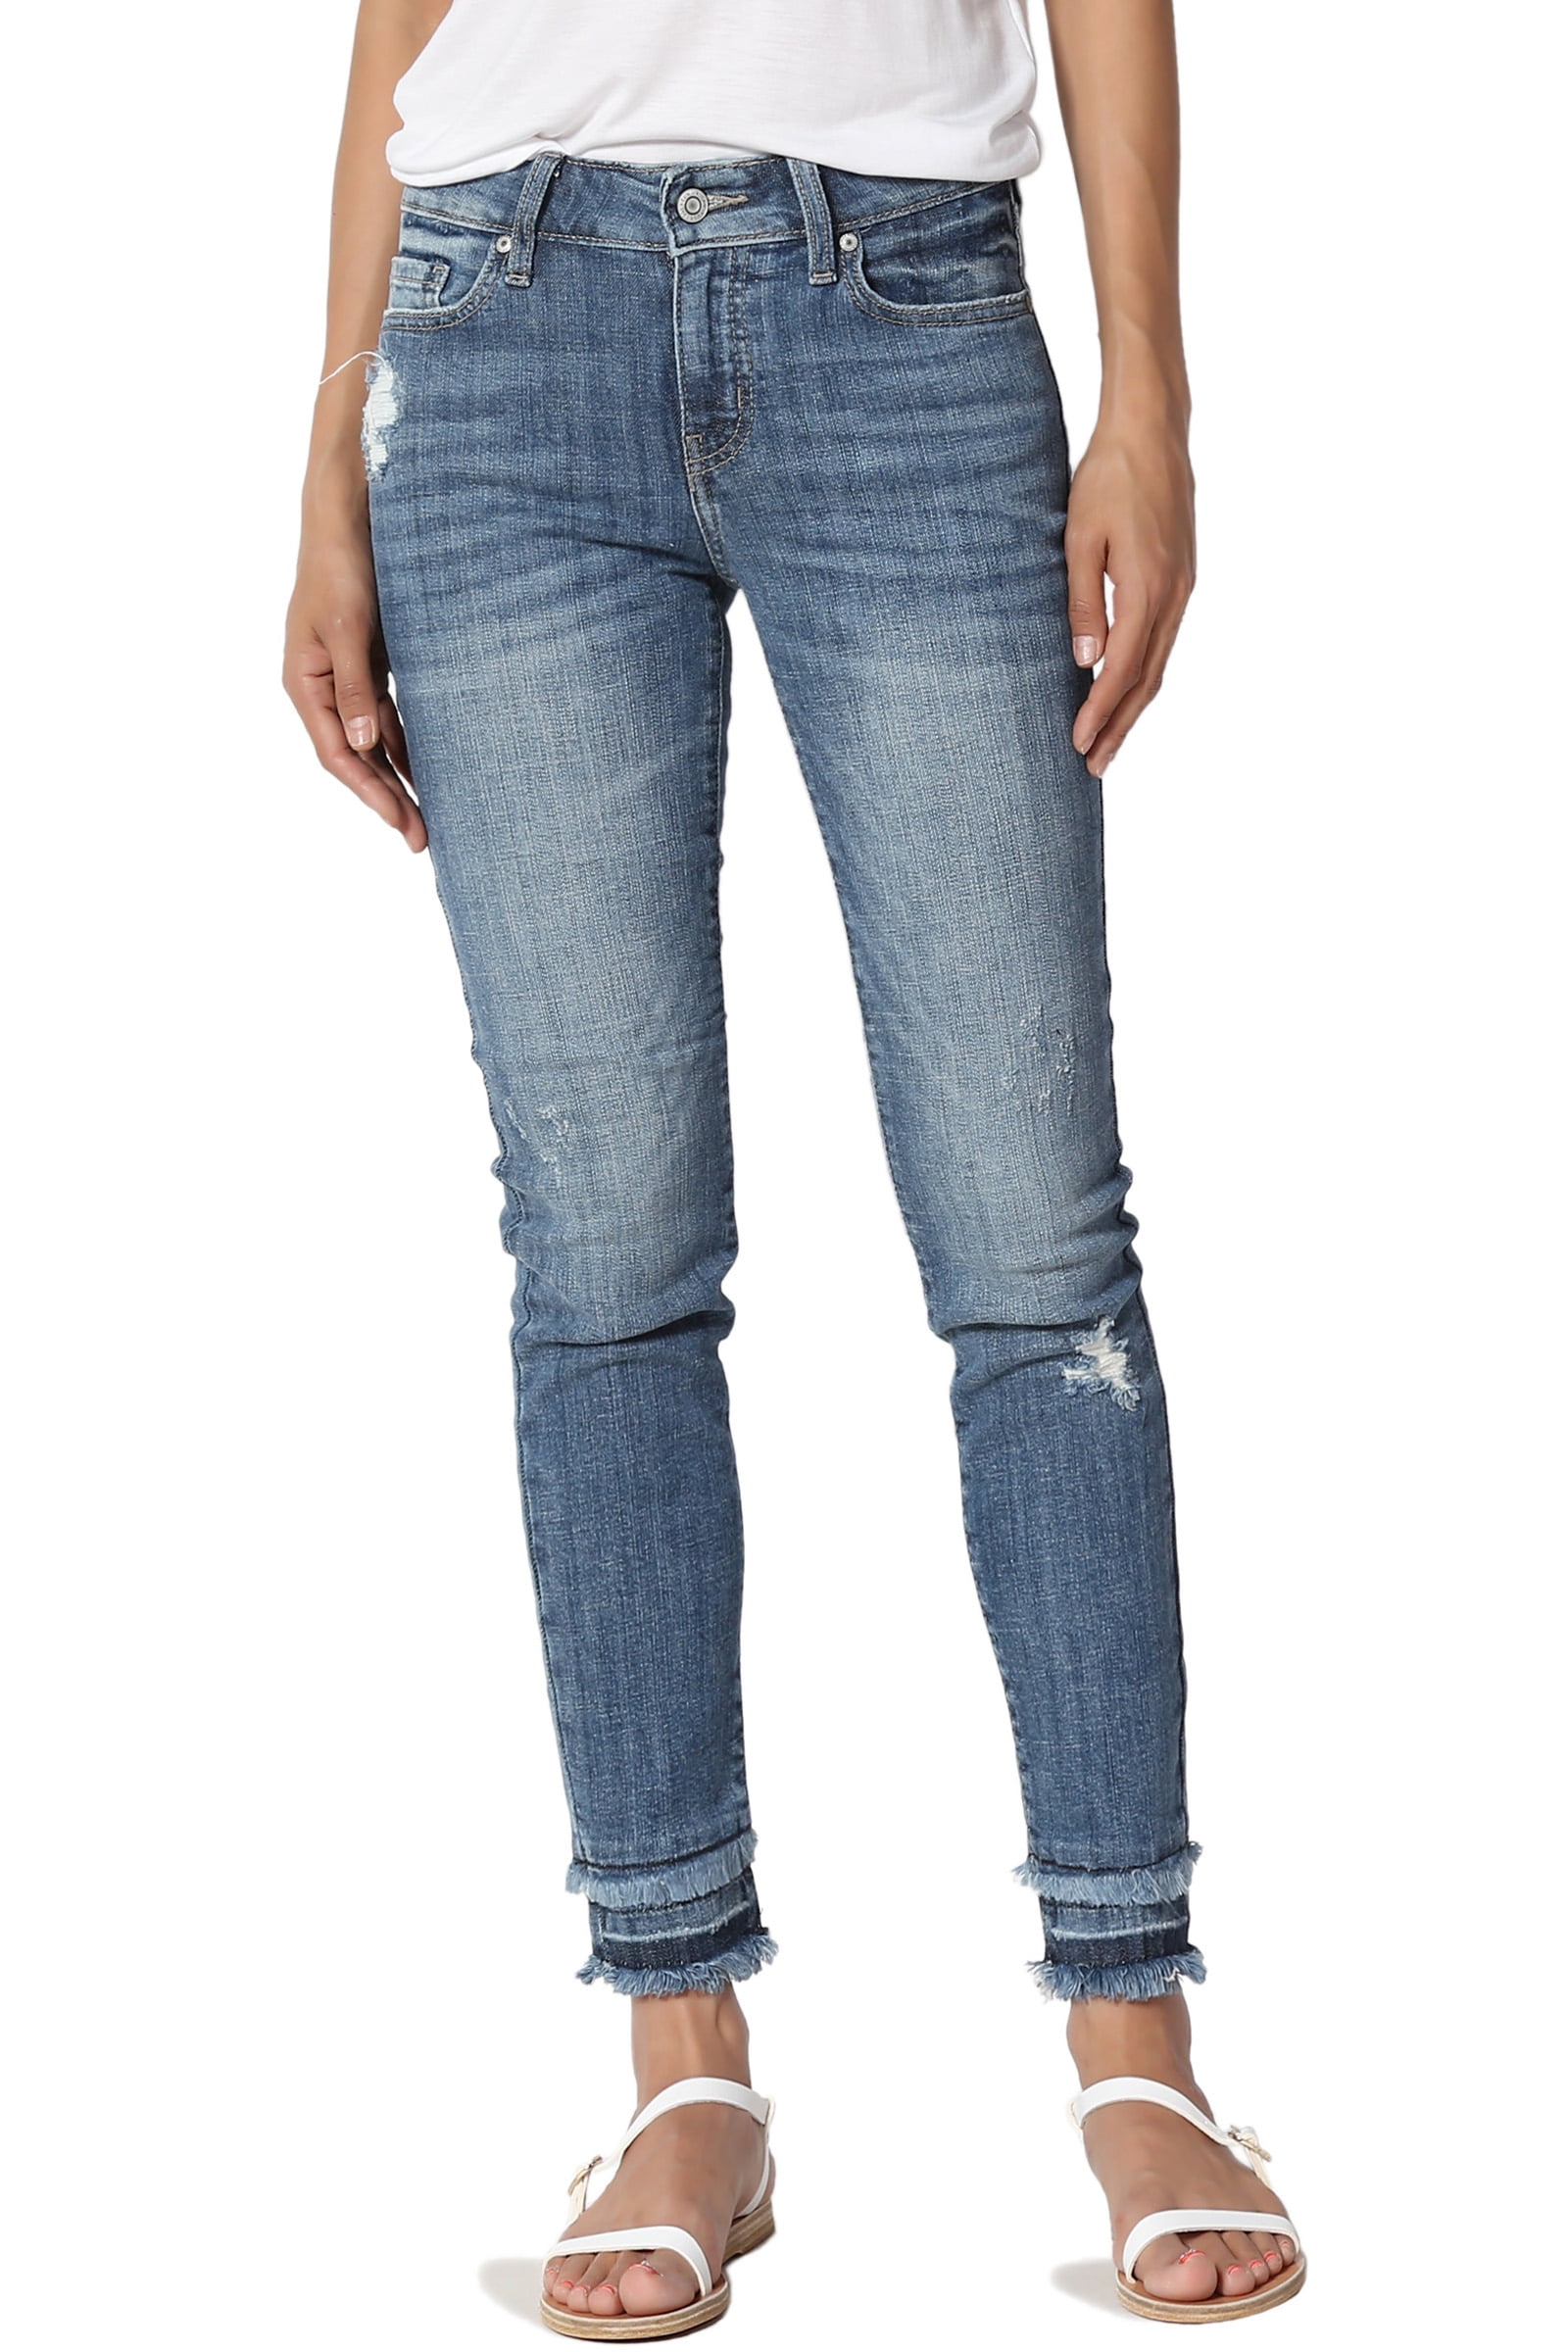 TheMogan Petite 30in Mid Rise Crop Bootcut Jeans in Basic Light Medium Blue Wash 